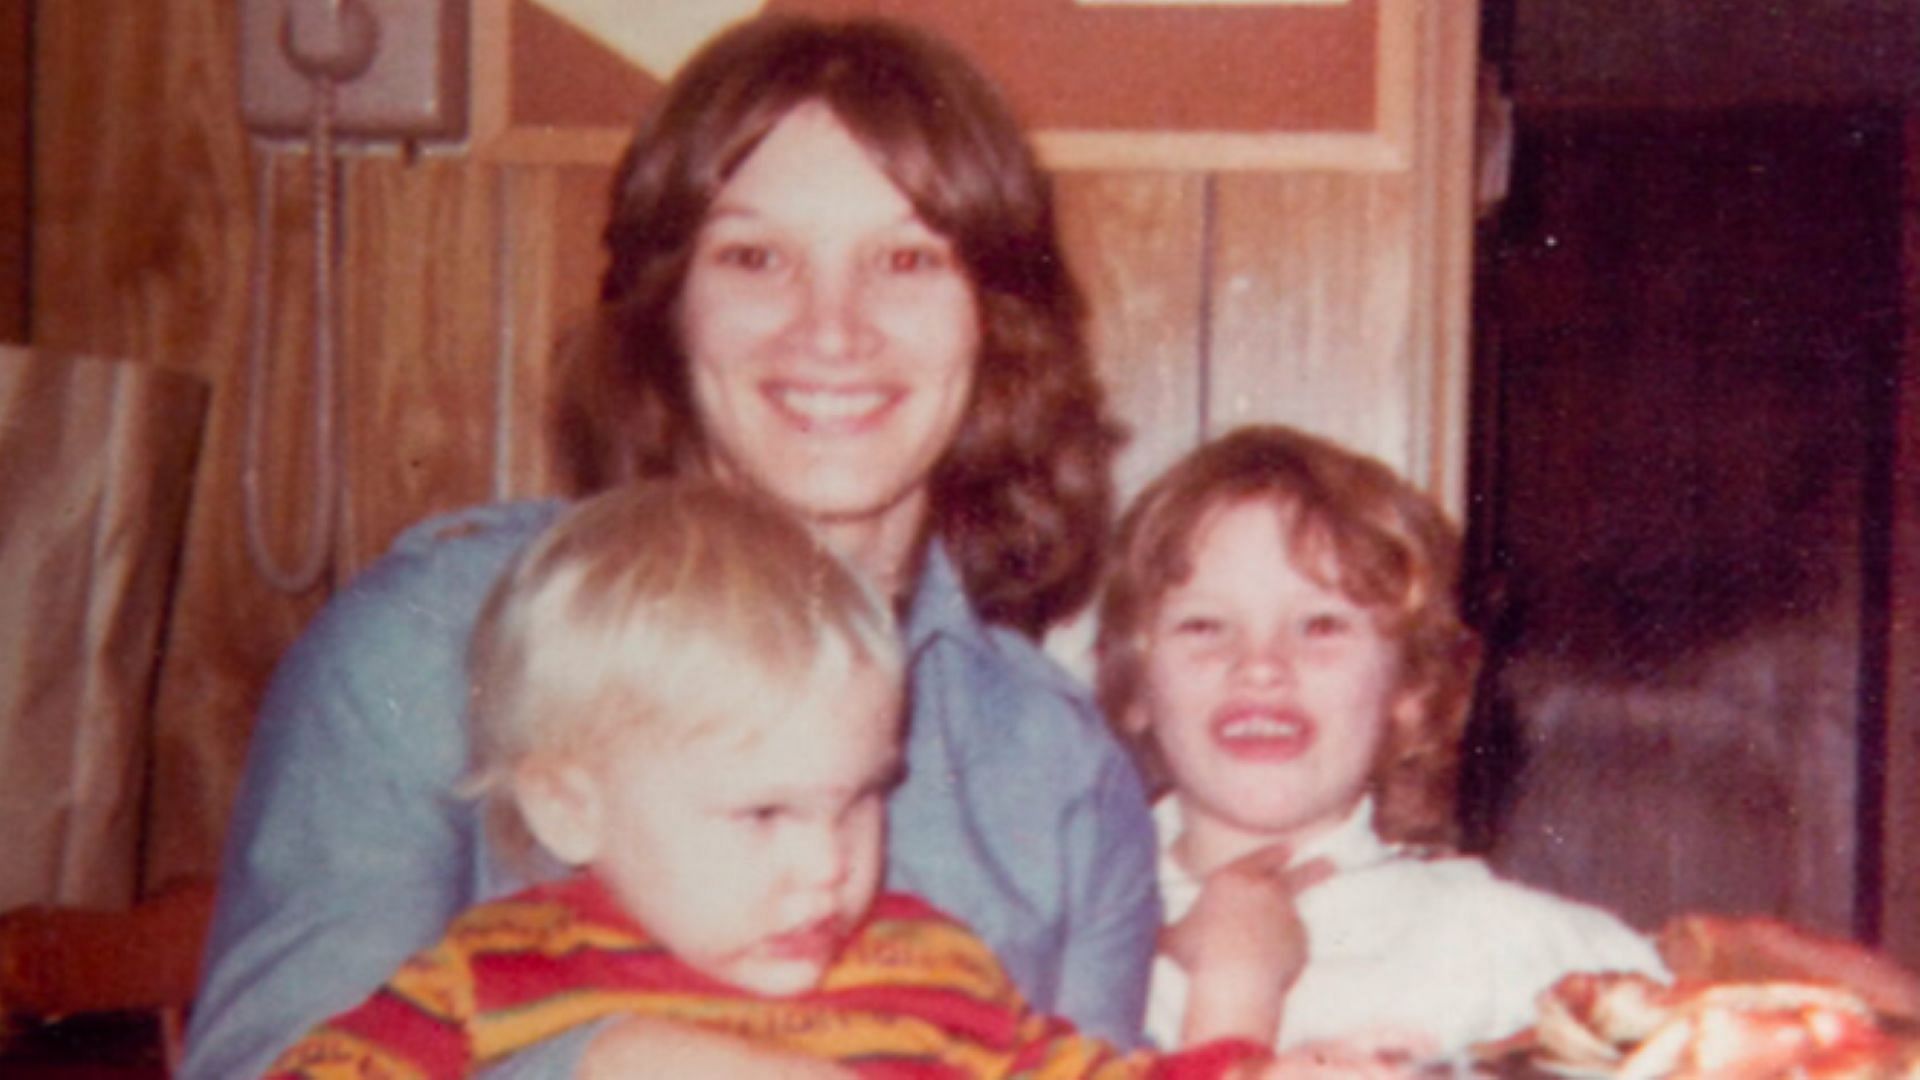 Joy Hibbs with her two children (Image via Bucks County DA)